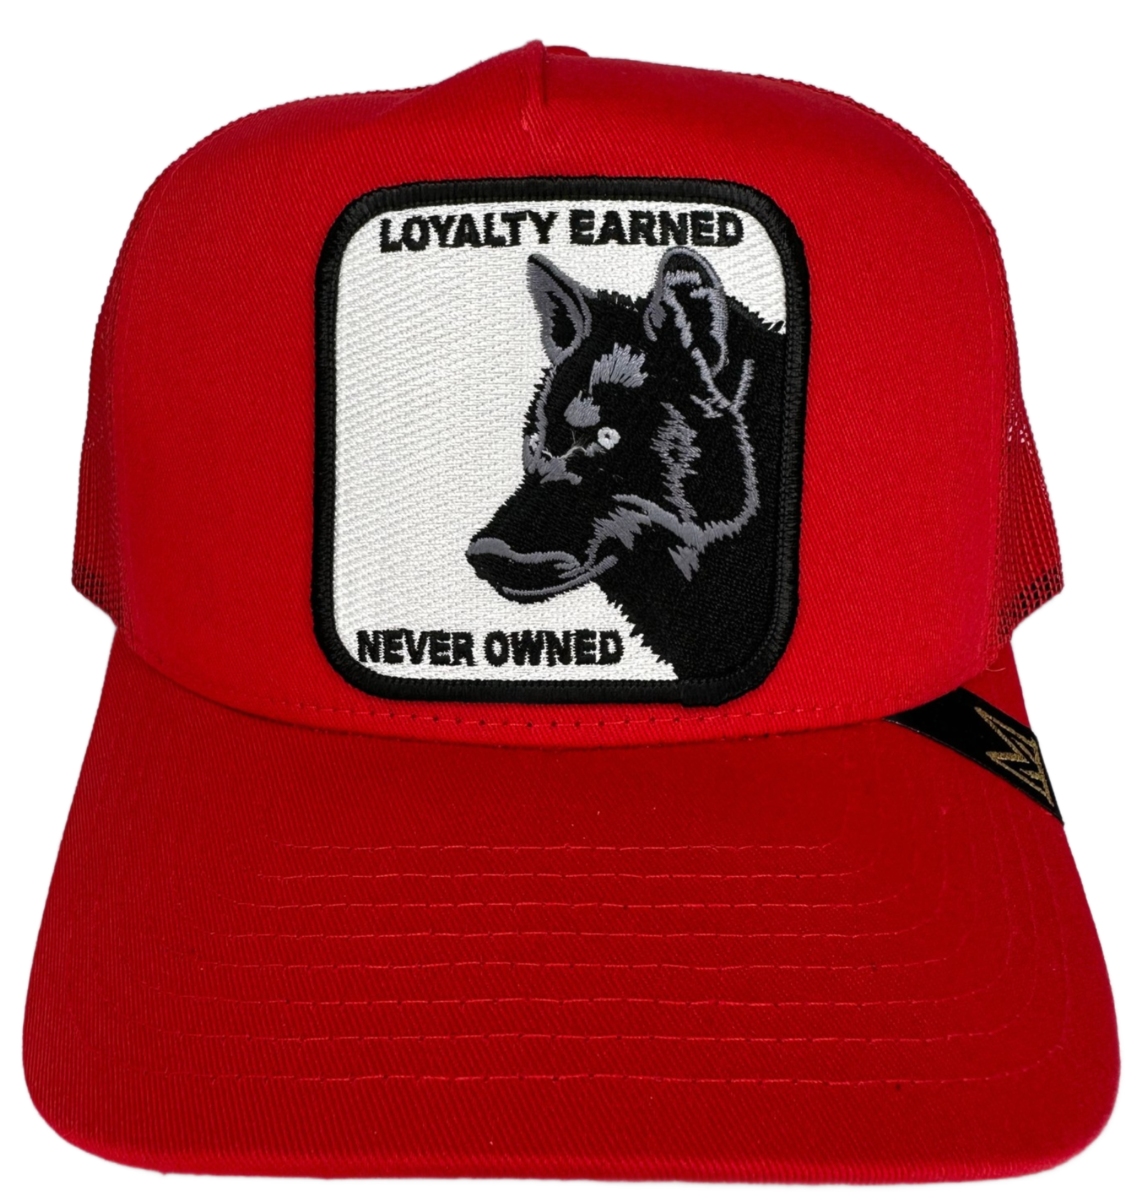 Loyalty Earned - Red